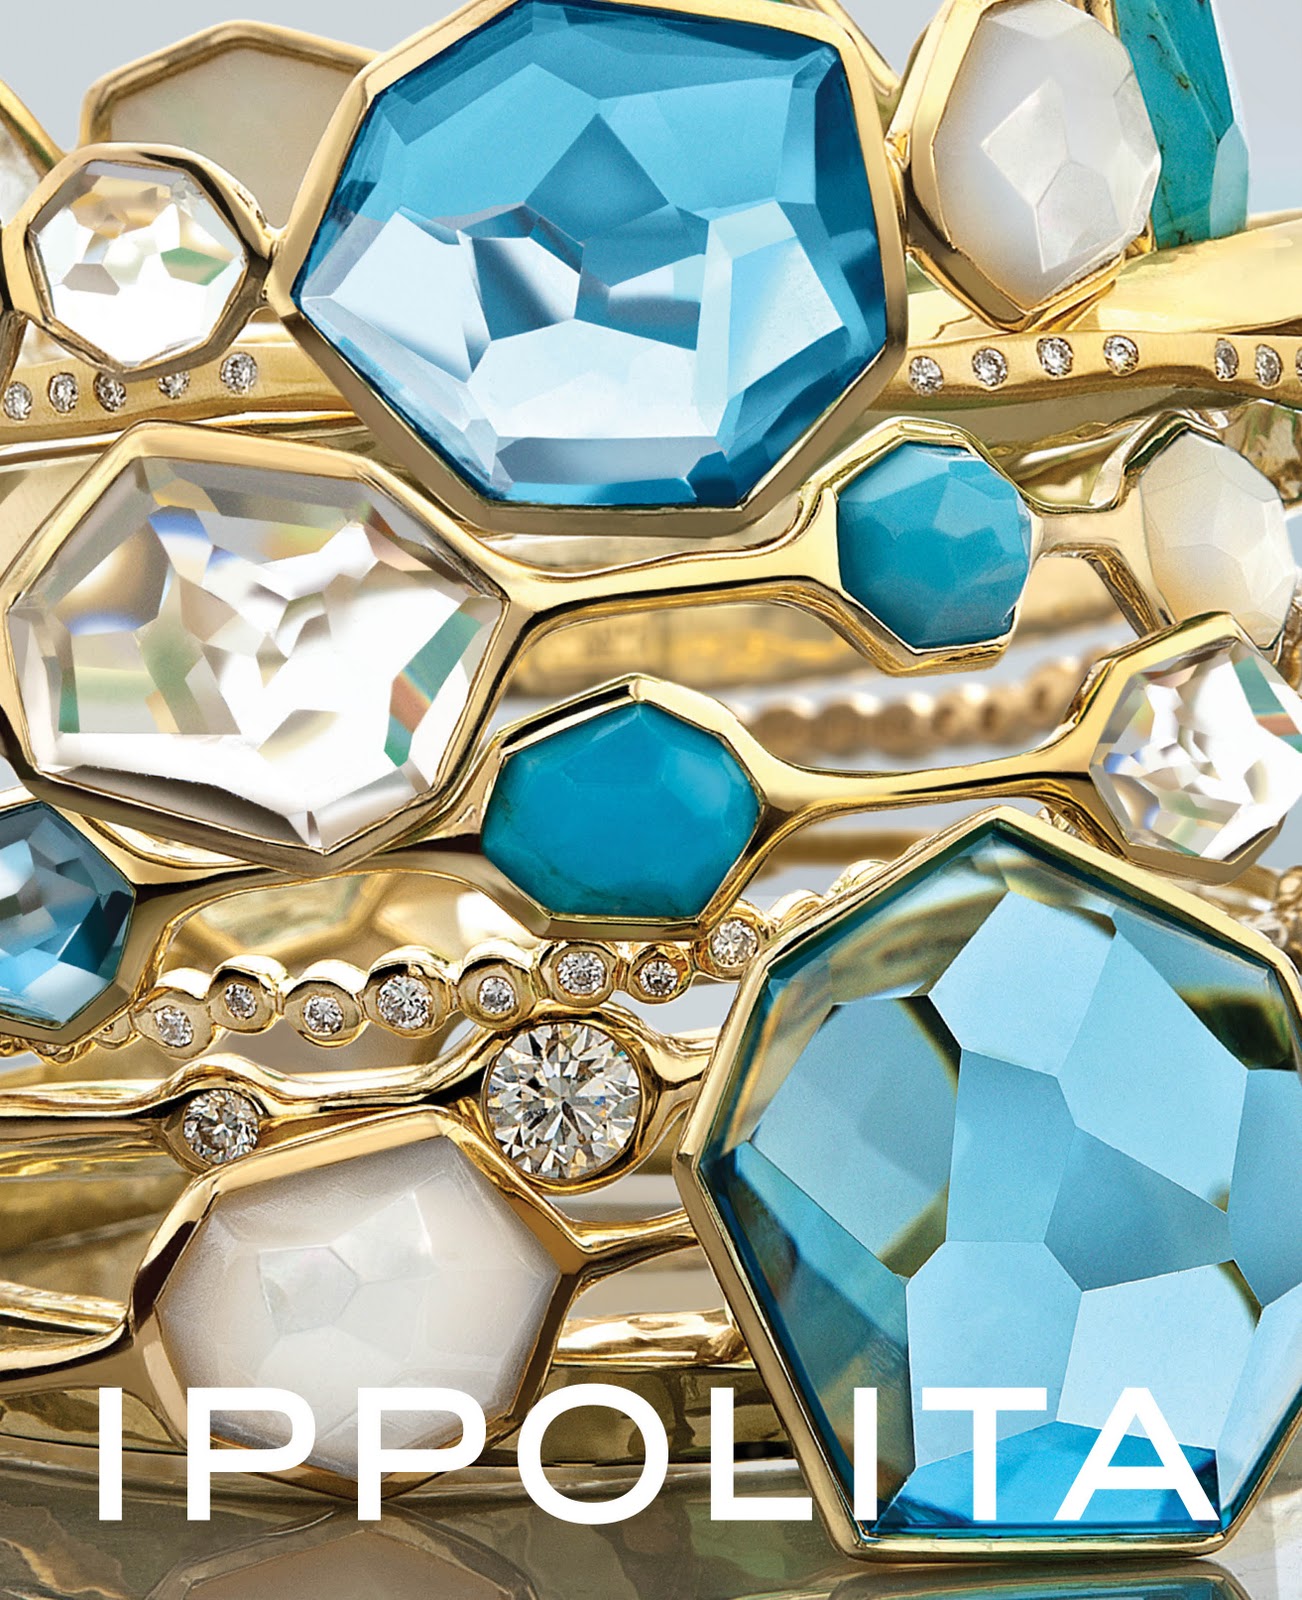 ... similar bracelet designed with gold and turquoise gemstones